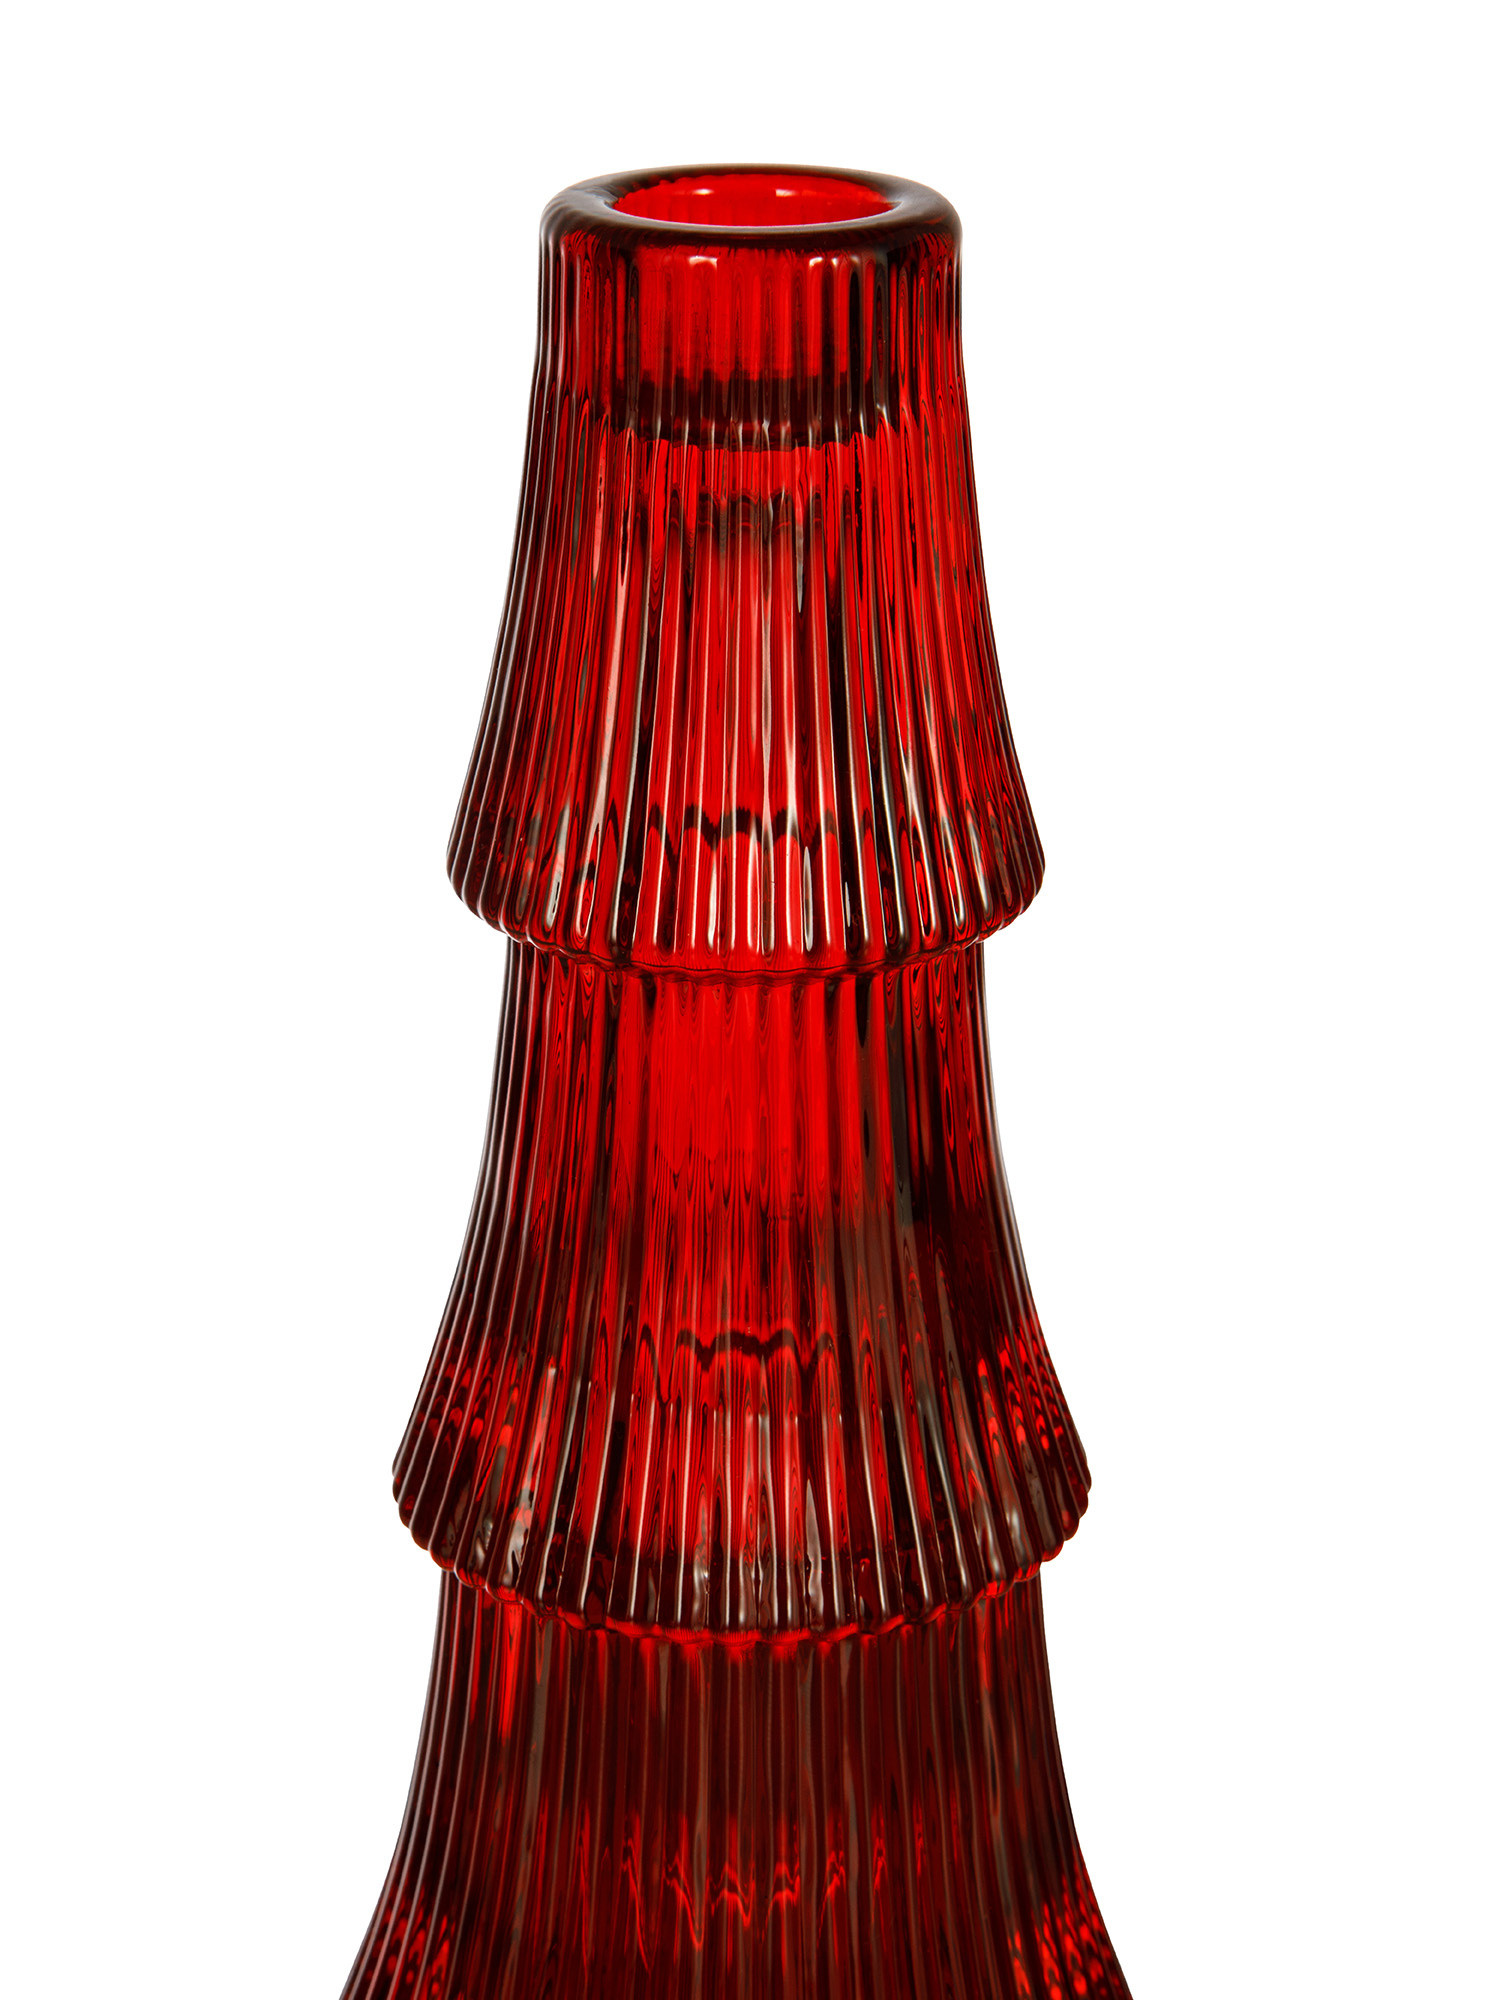 Portacandele in vetro, Rosso, large image number 1